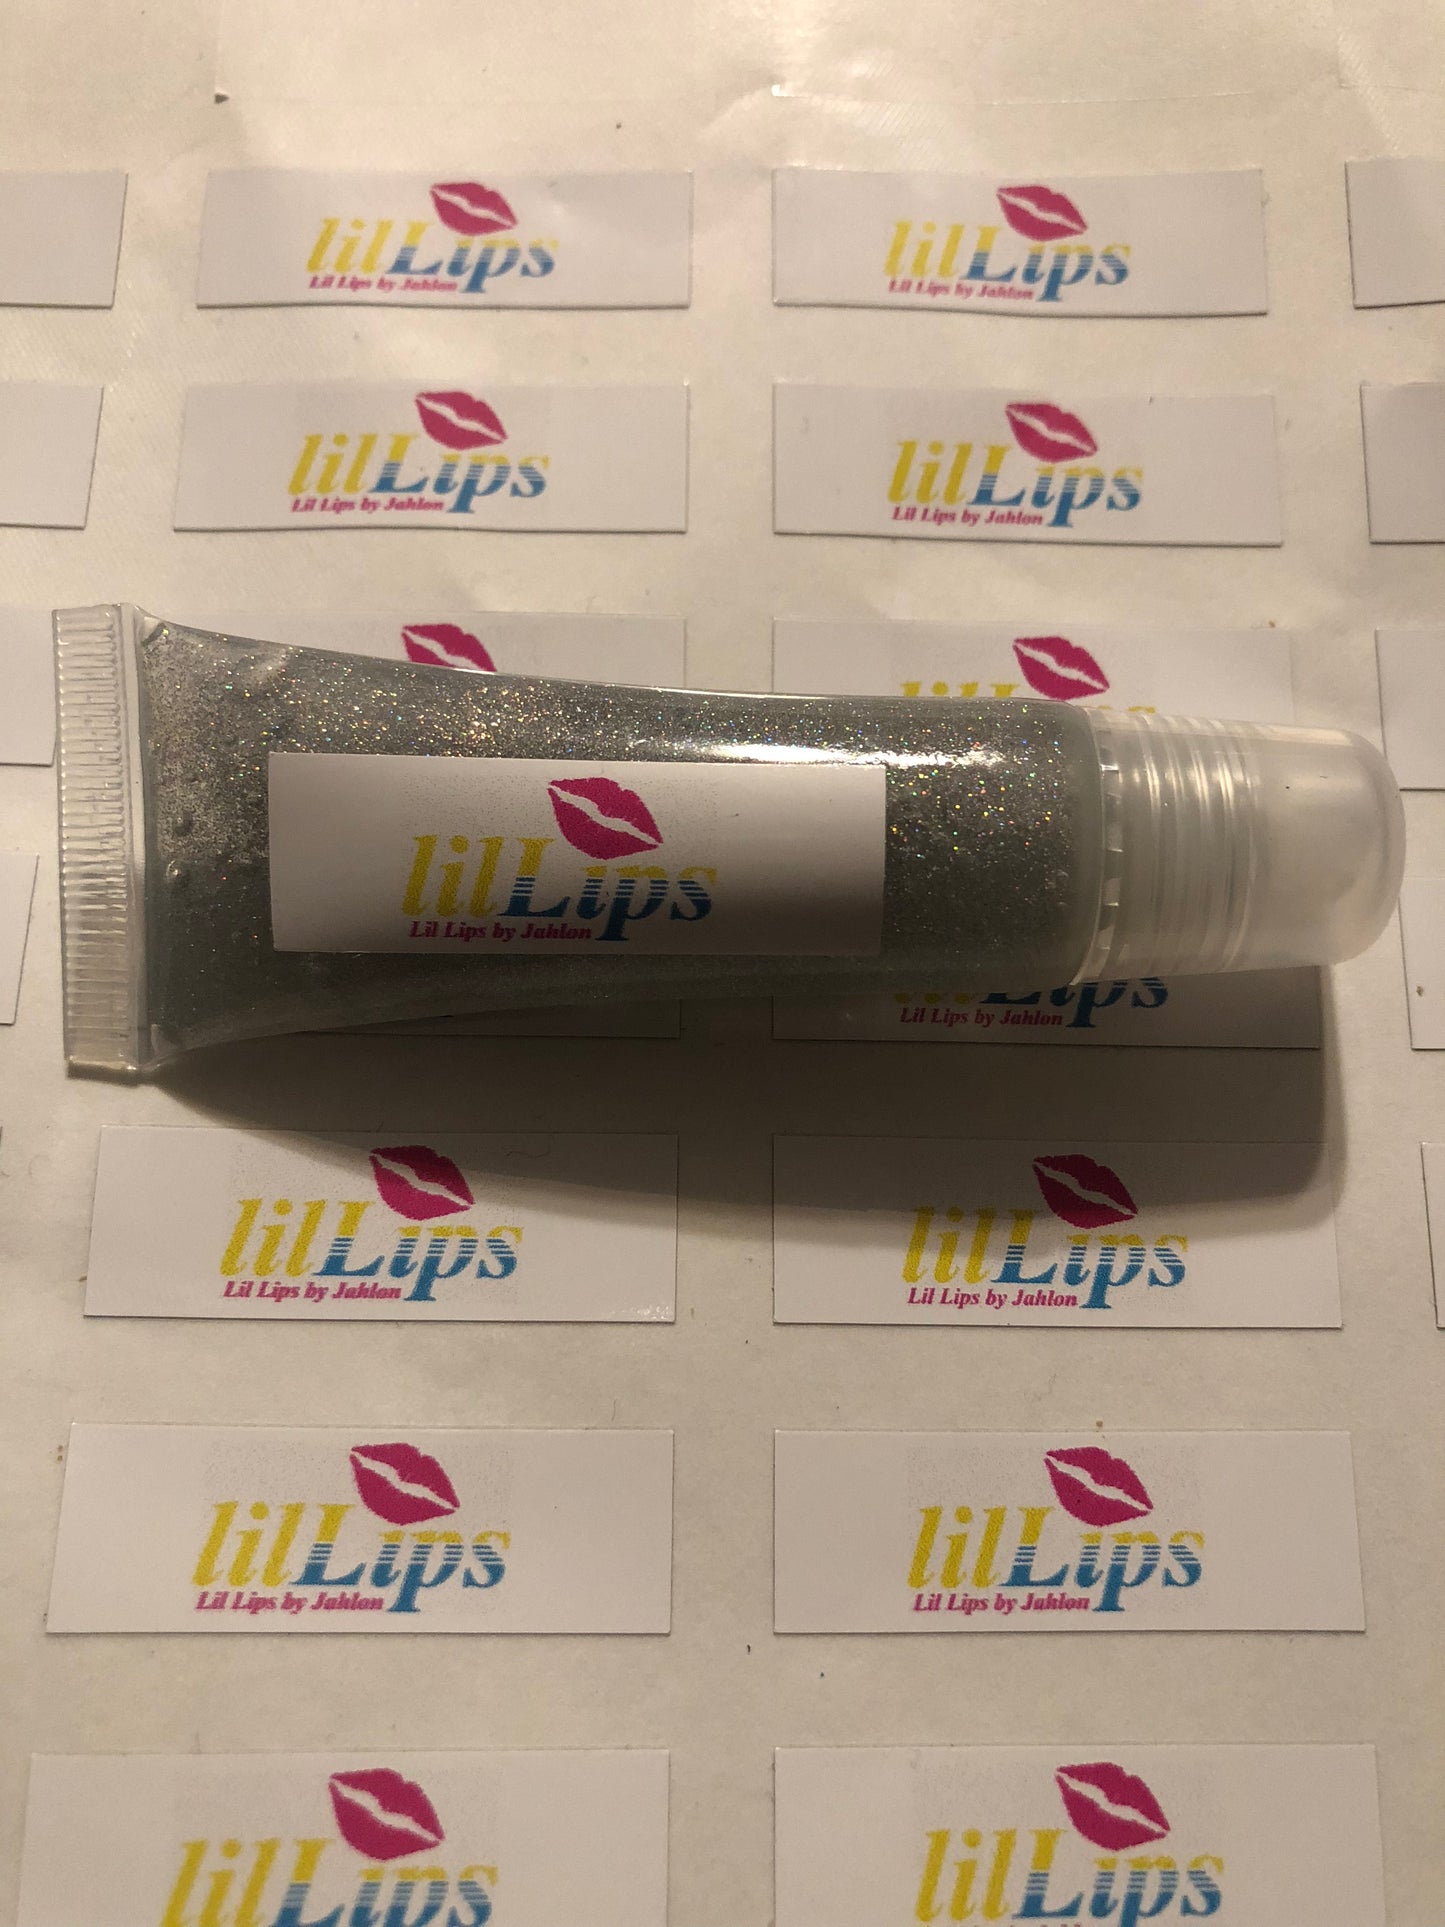 lilLips by Jahlon Lipgloss